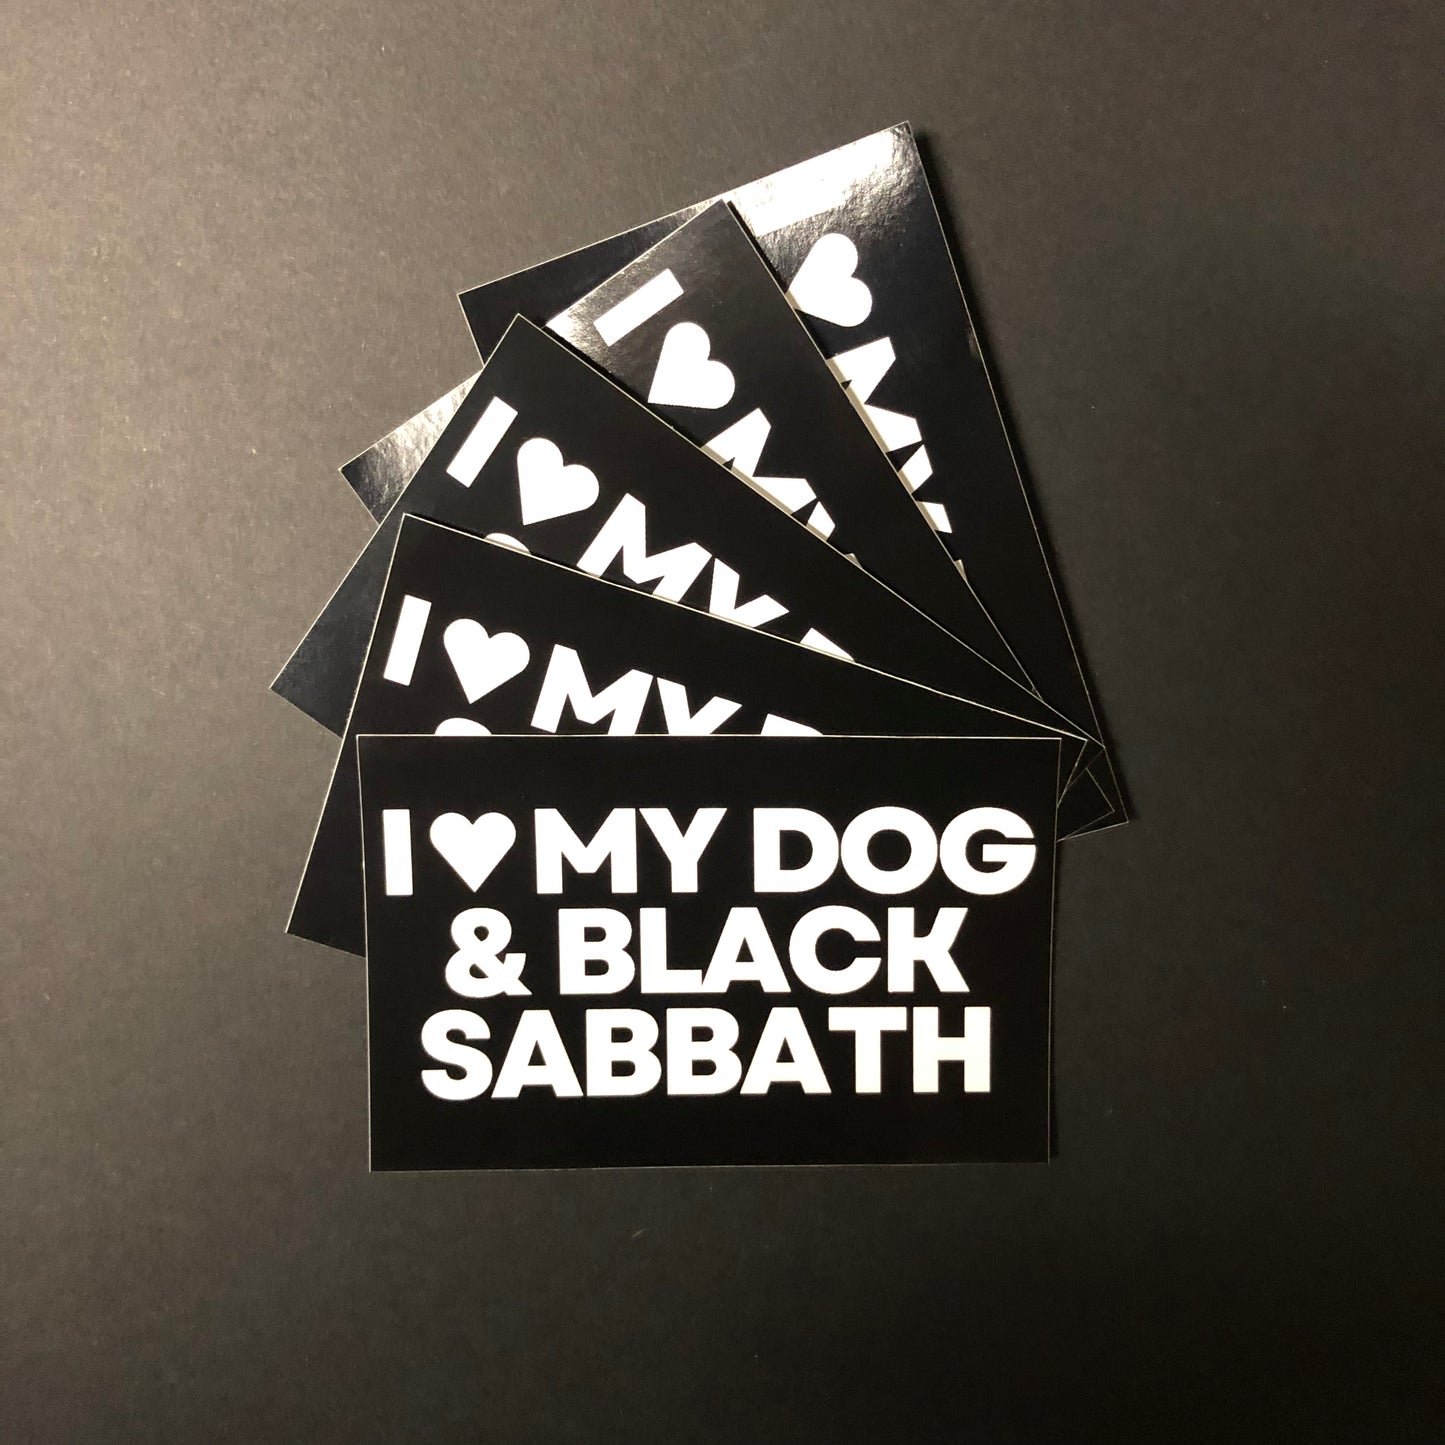 I LOVE MY DOG & BLACK SABBATH (Set of Two)